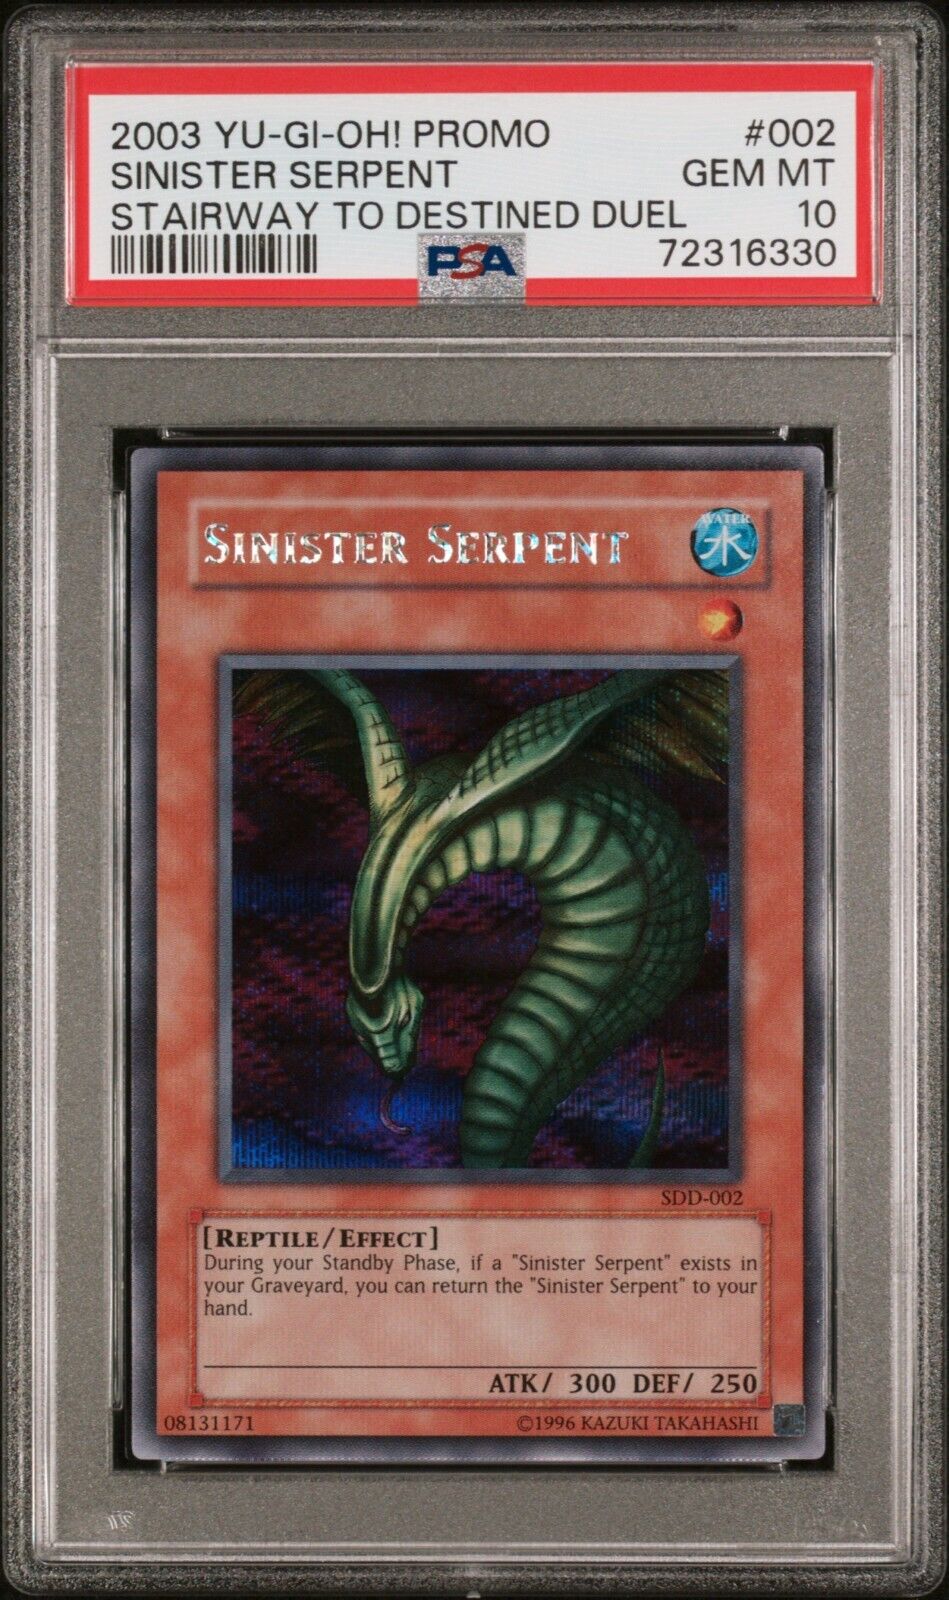 Yugioh! PSA 10 2003 Sinister Serpent SDD-002 Secret Rare Prismatic